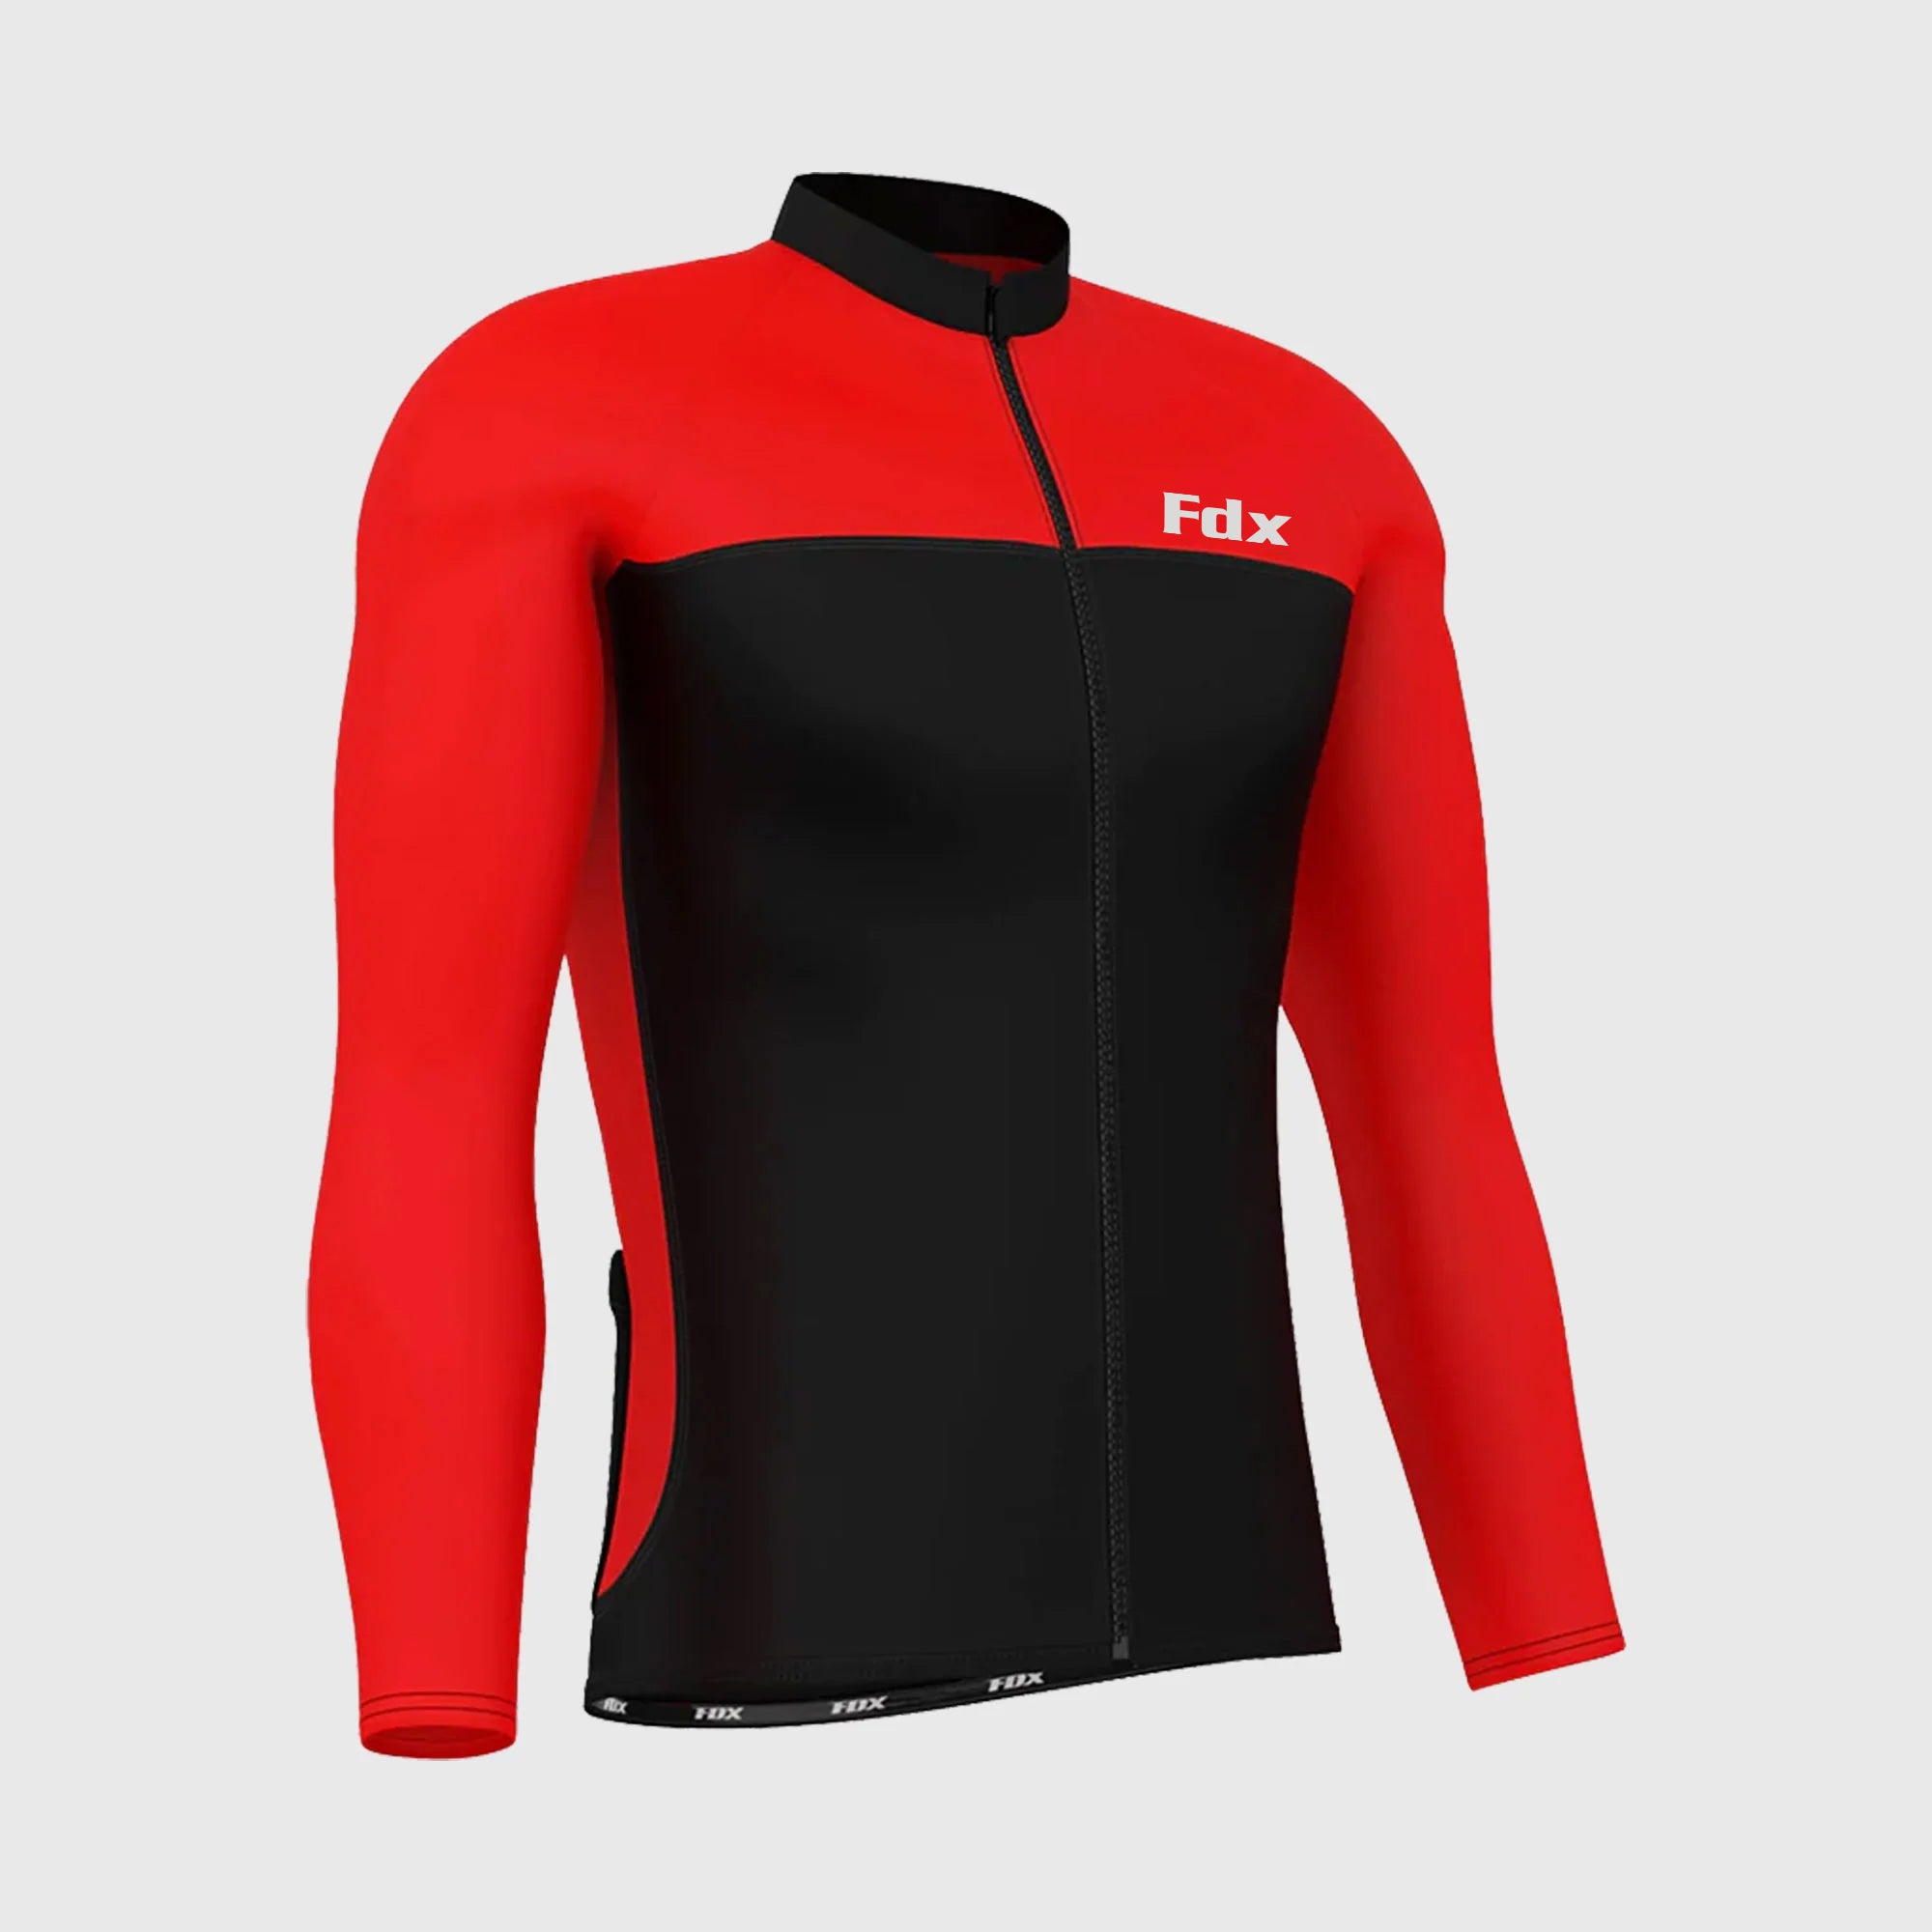 Fdx Mens Black & Red Long Sleeve Cycling Jersey for Winter Roubaix Thermal Fleece Road Bike Wear Top Full Zipper, Pockets & Hi-viz Reflectors - Comet